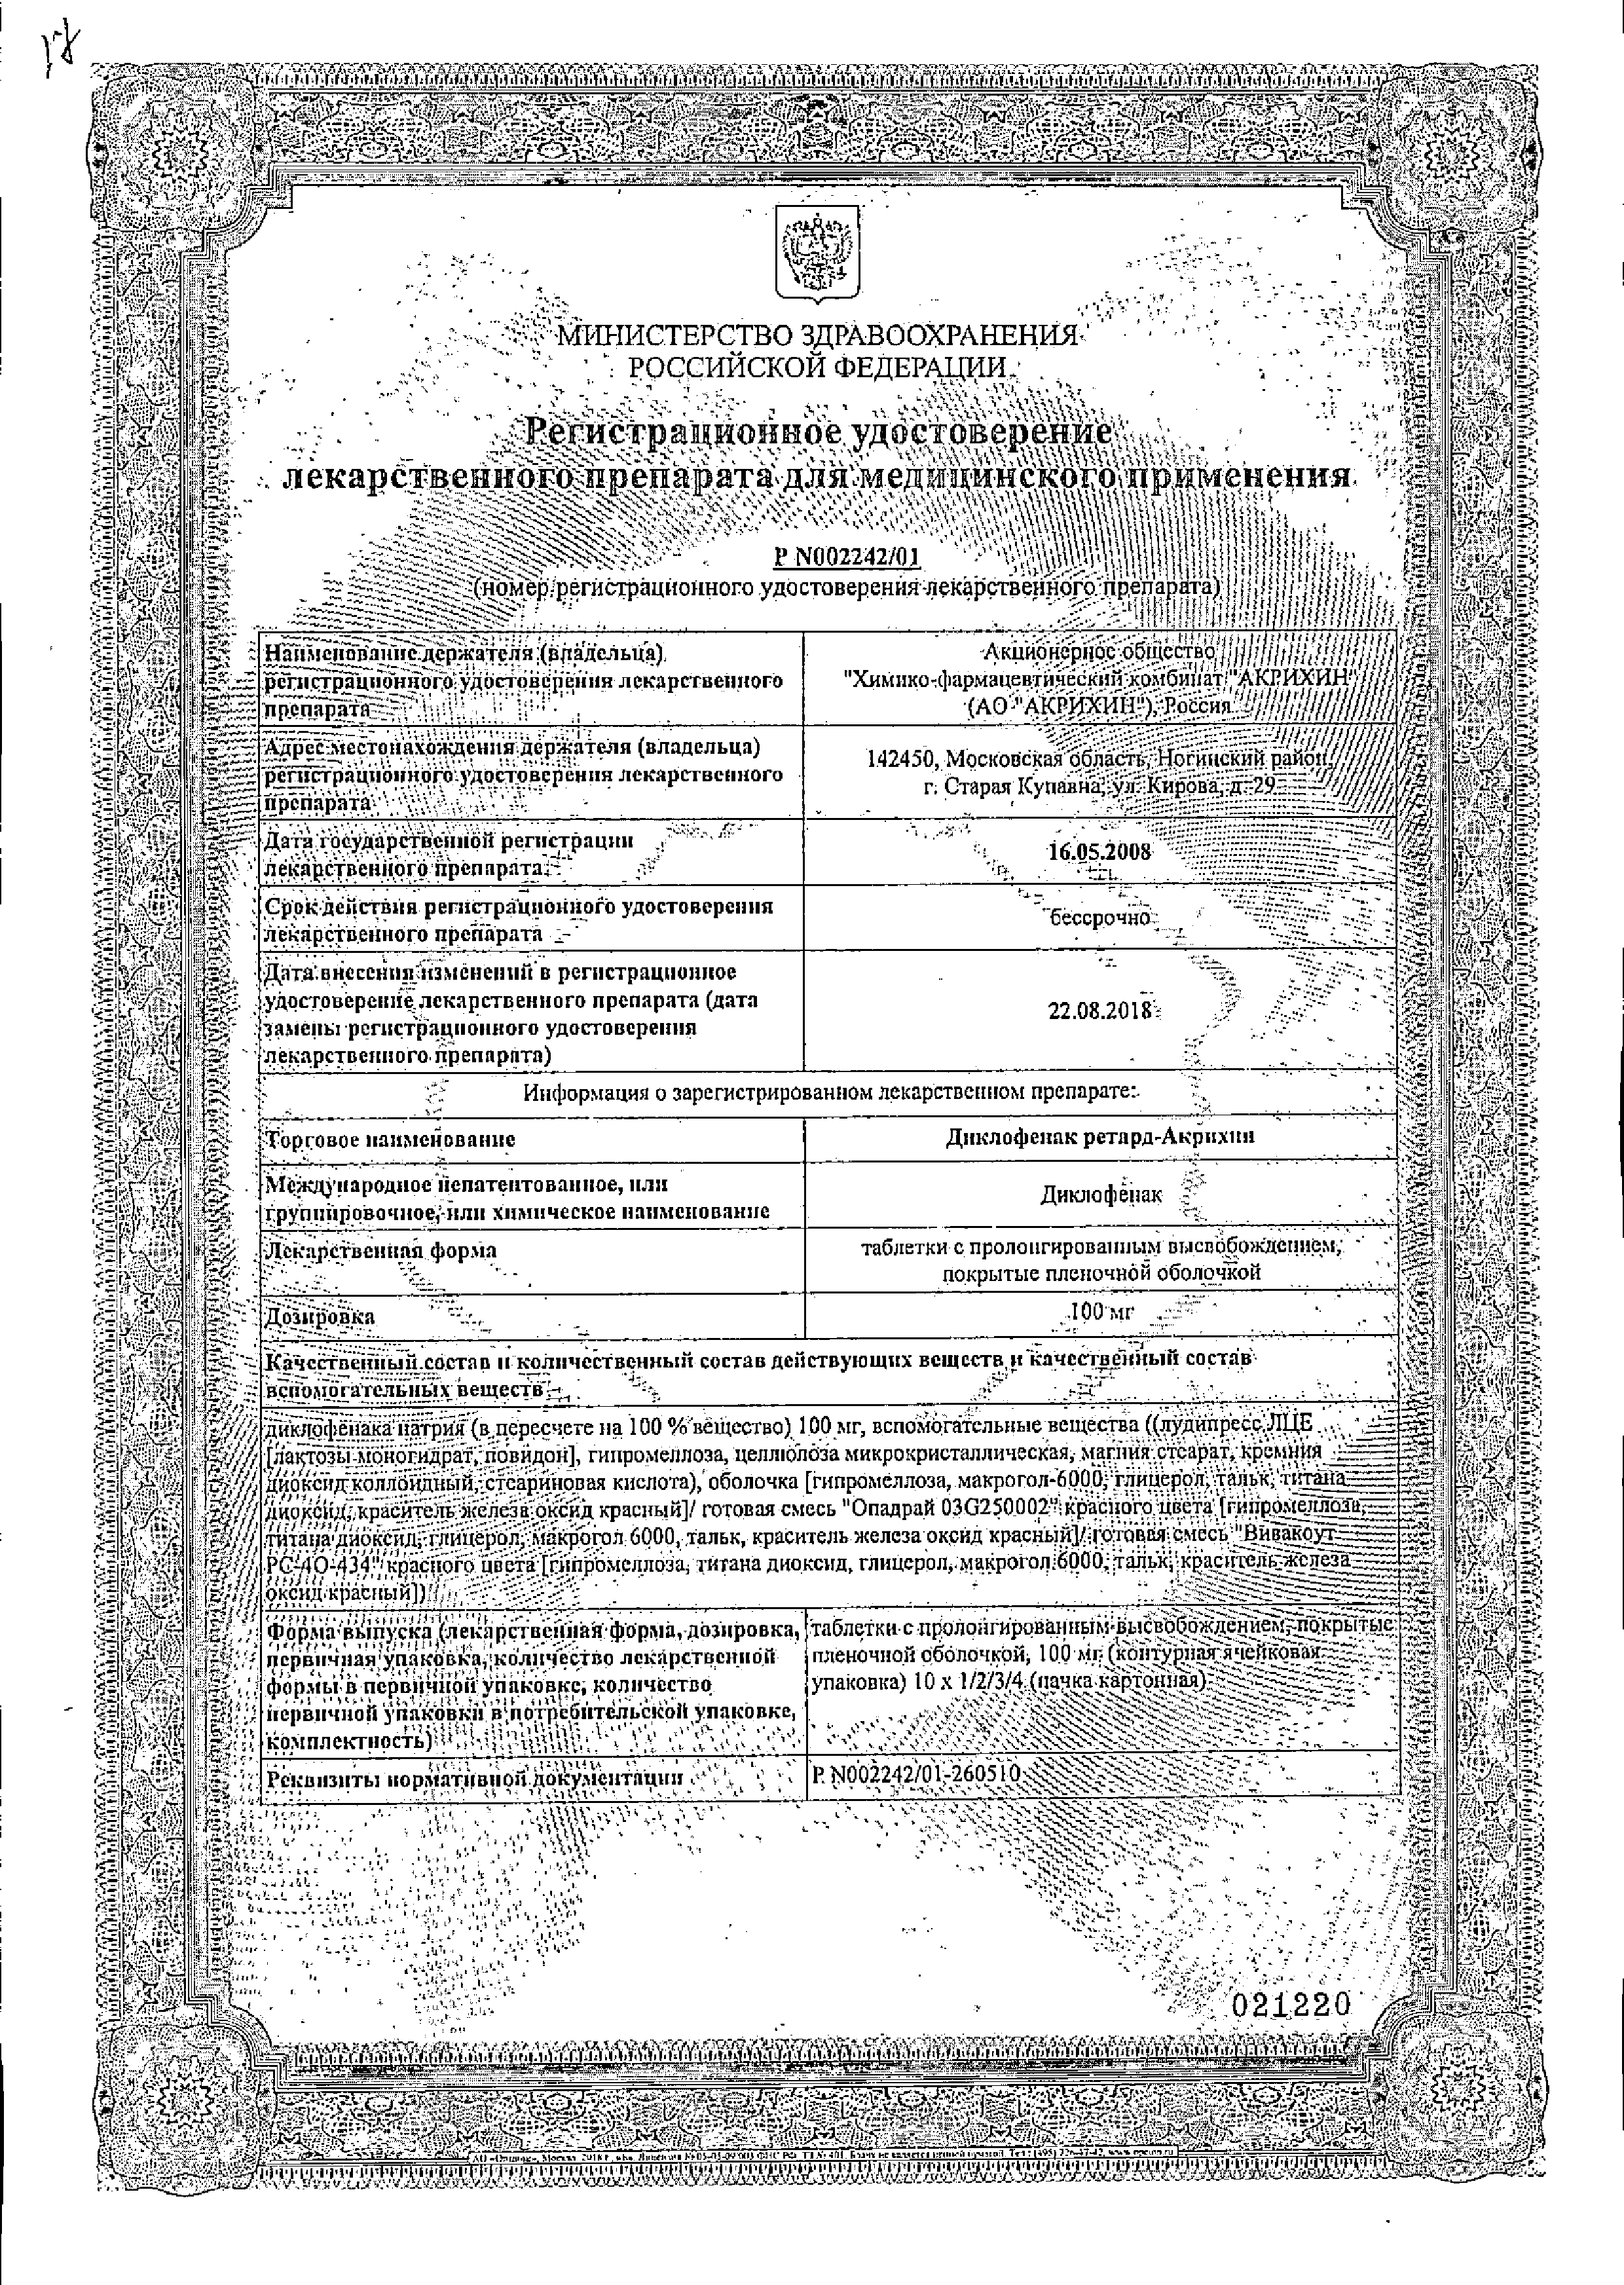 Диклофенак ретард-Акрихин сертификат